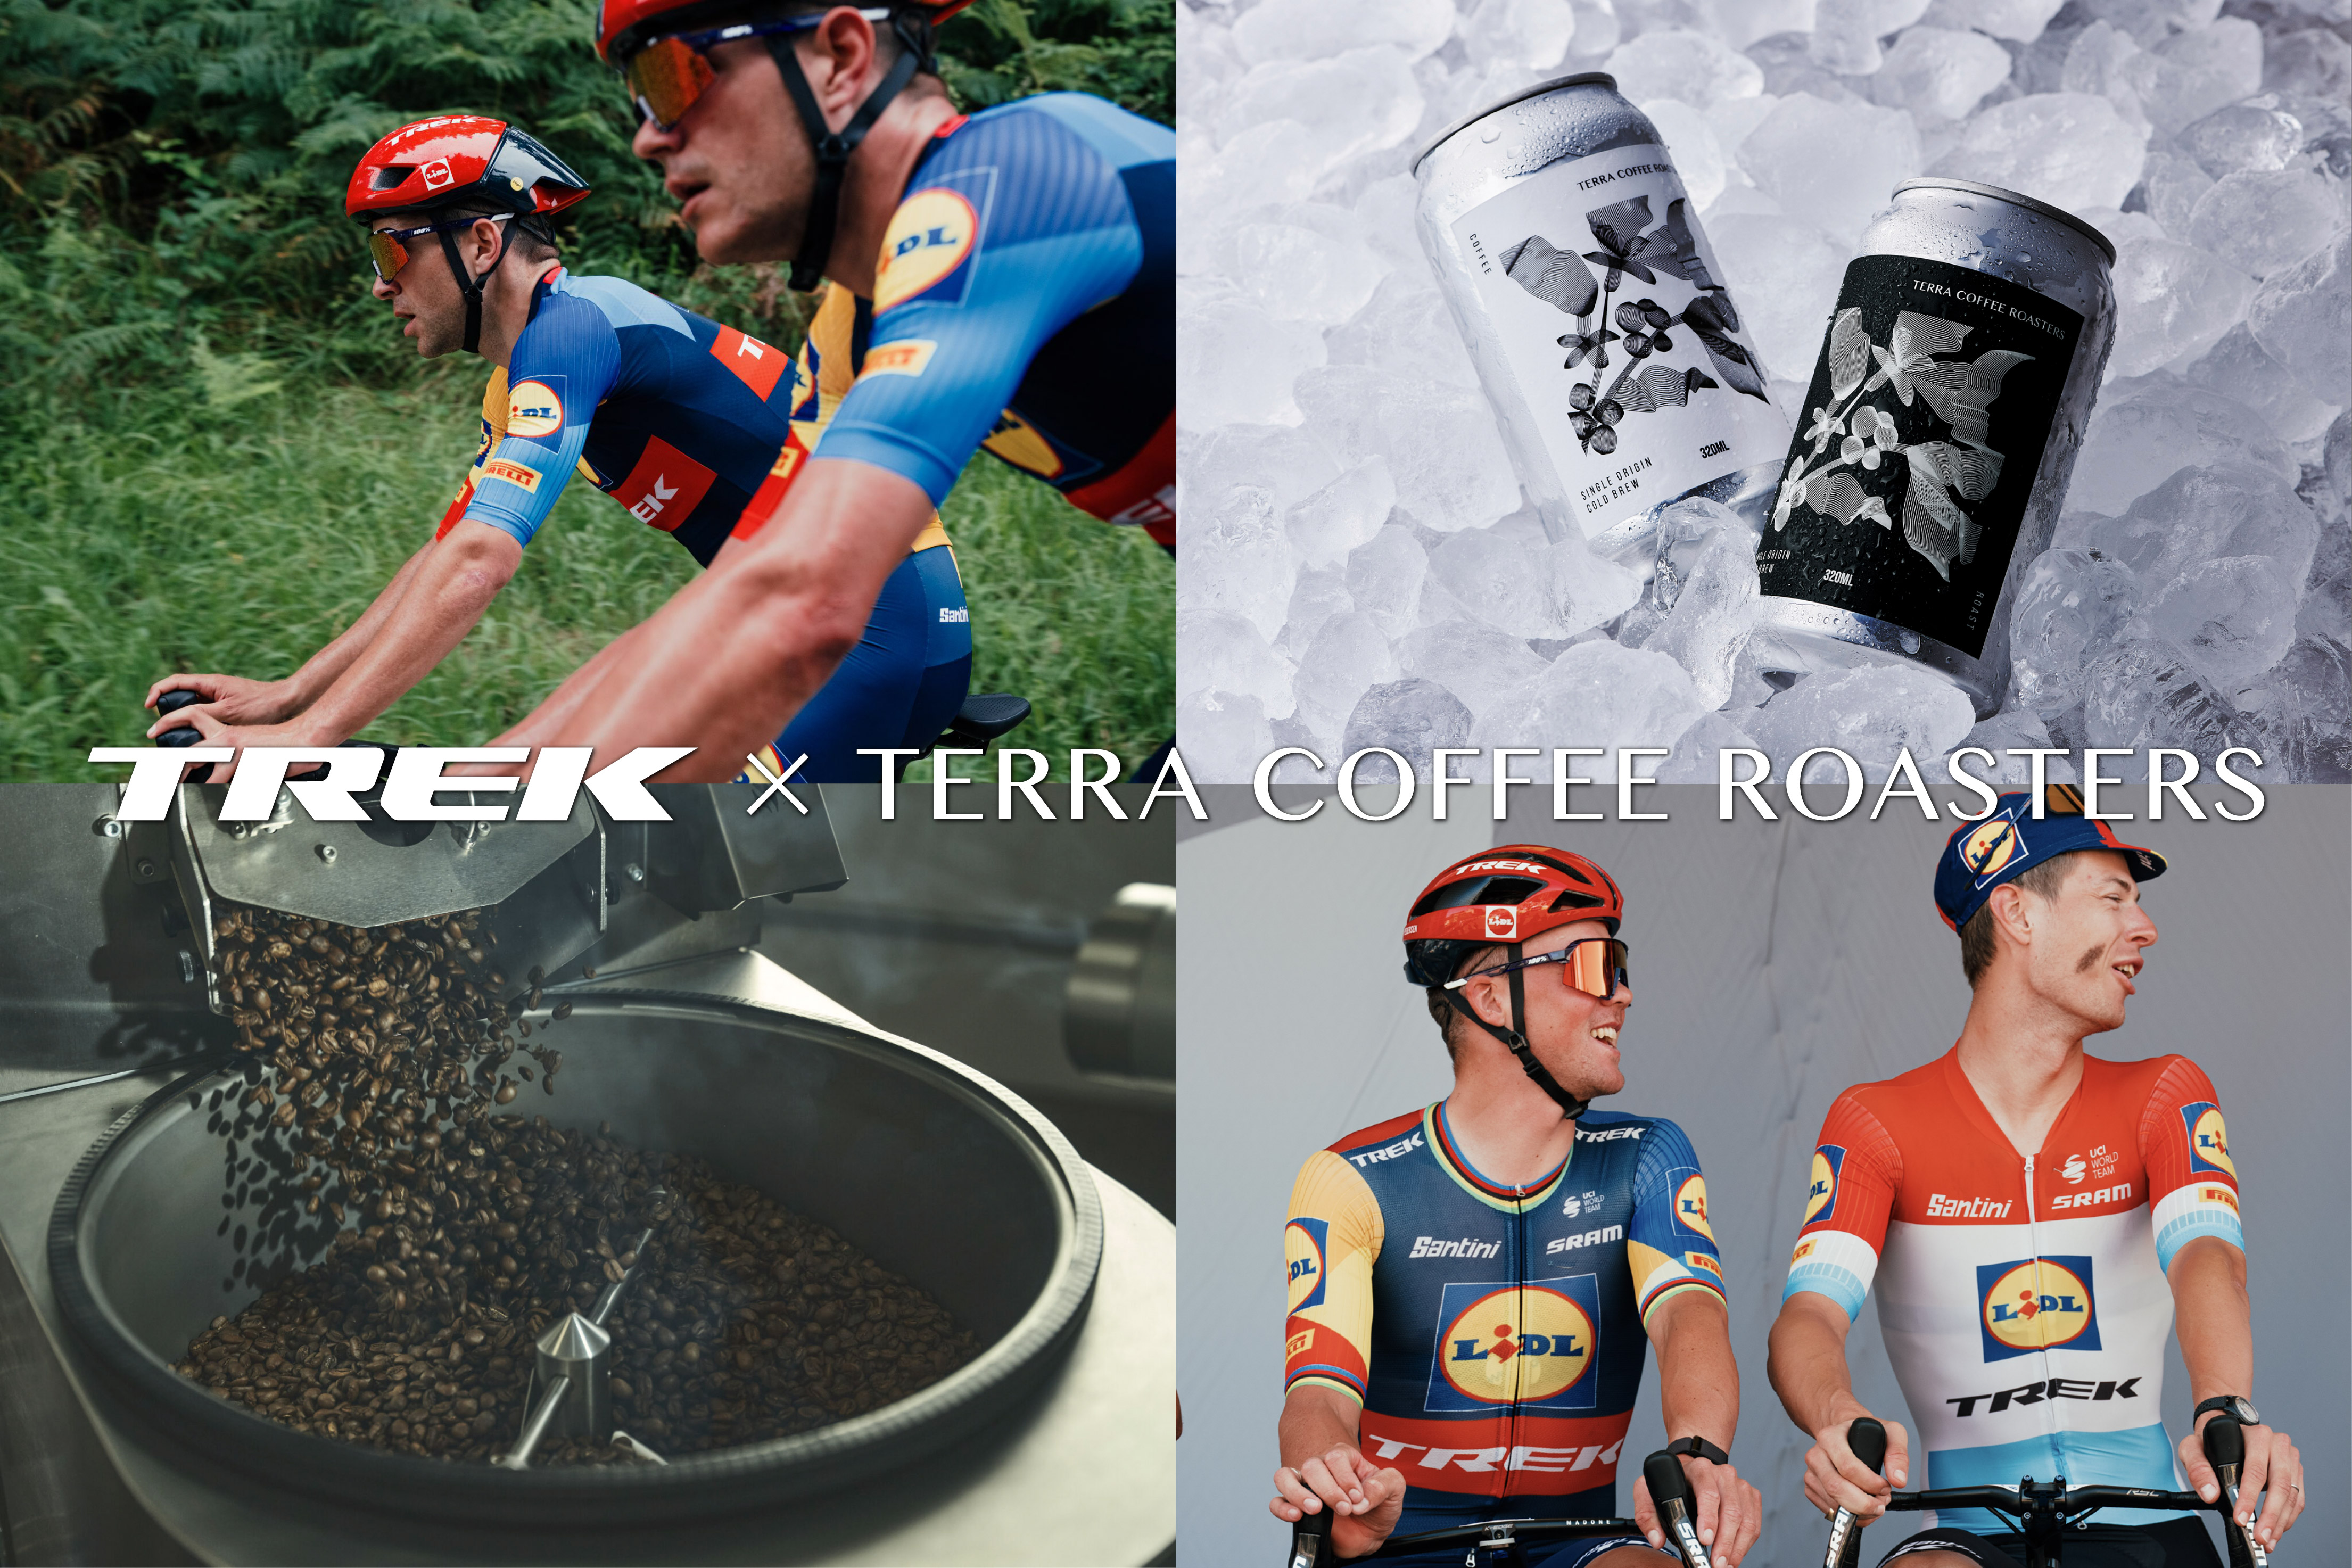 TERRA COFFEE ROASTERSがトレック・ジャパンとコラボ。ジャパンカップ